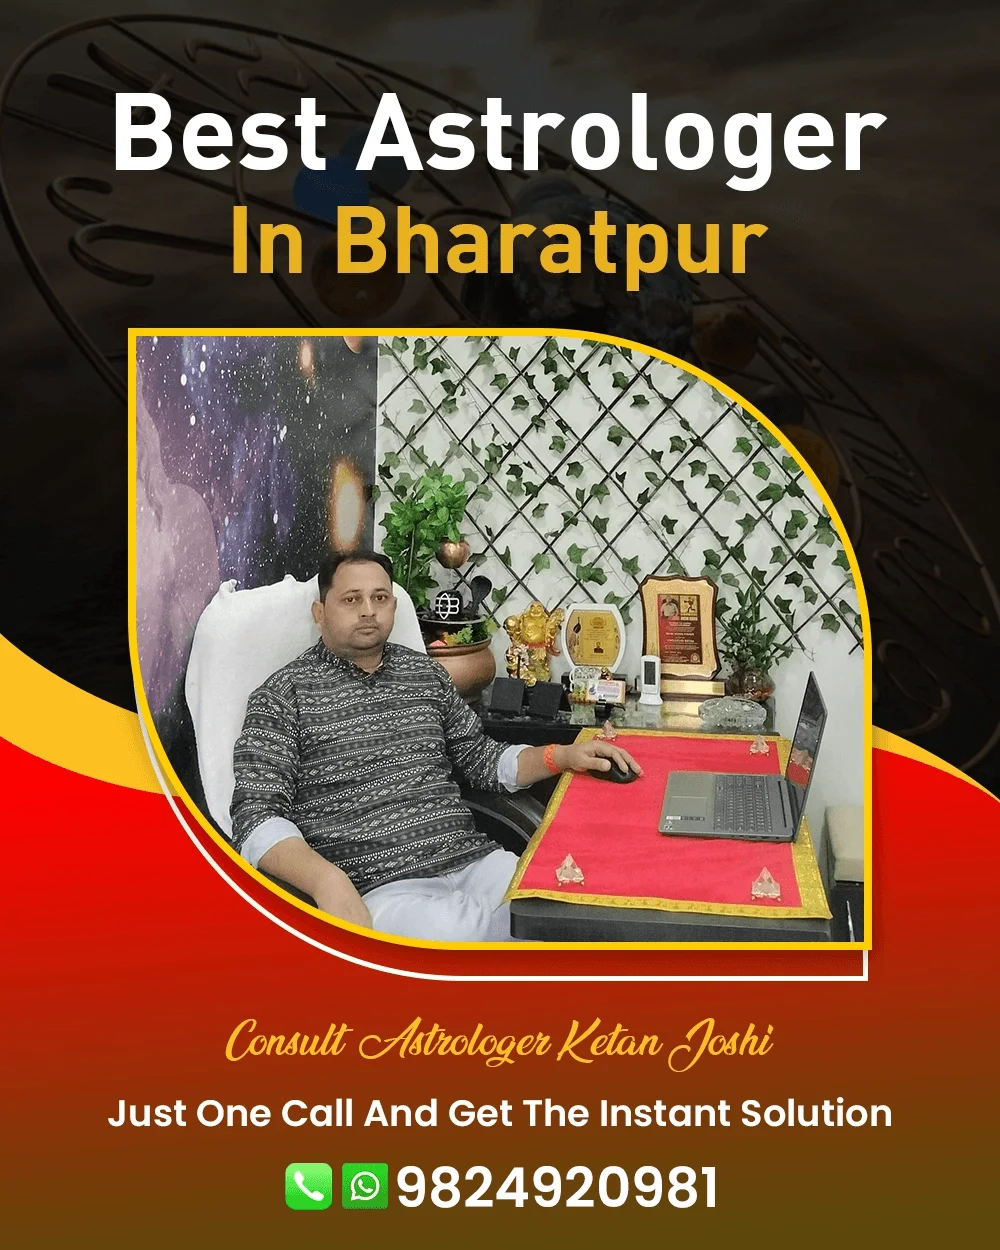 Best Astrologer In Bharatpur